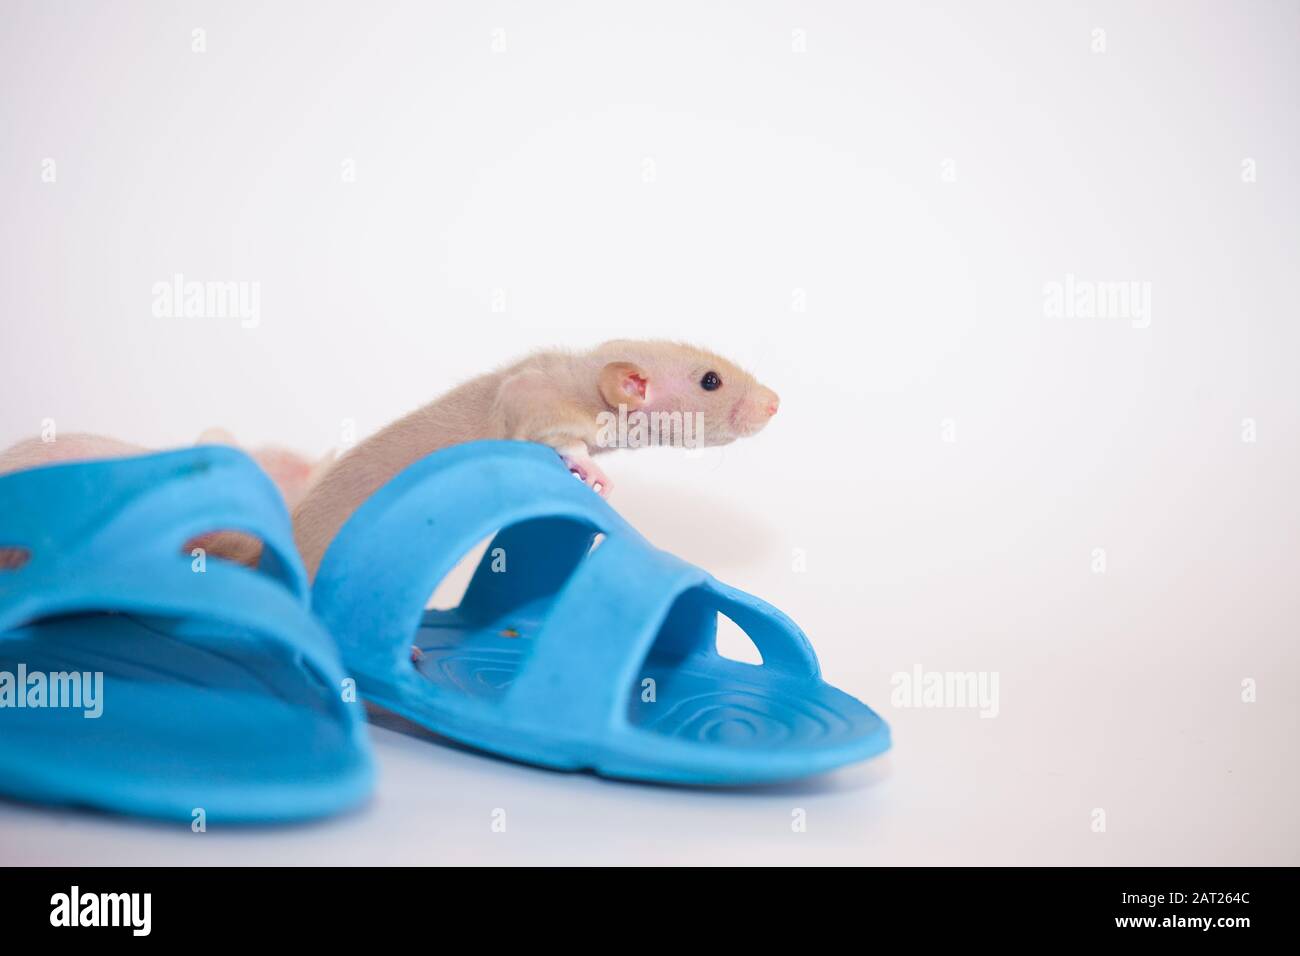 rat slippers